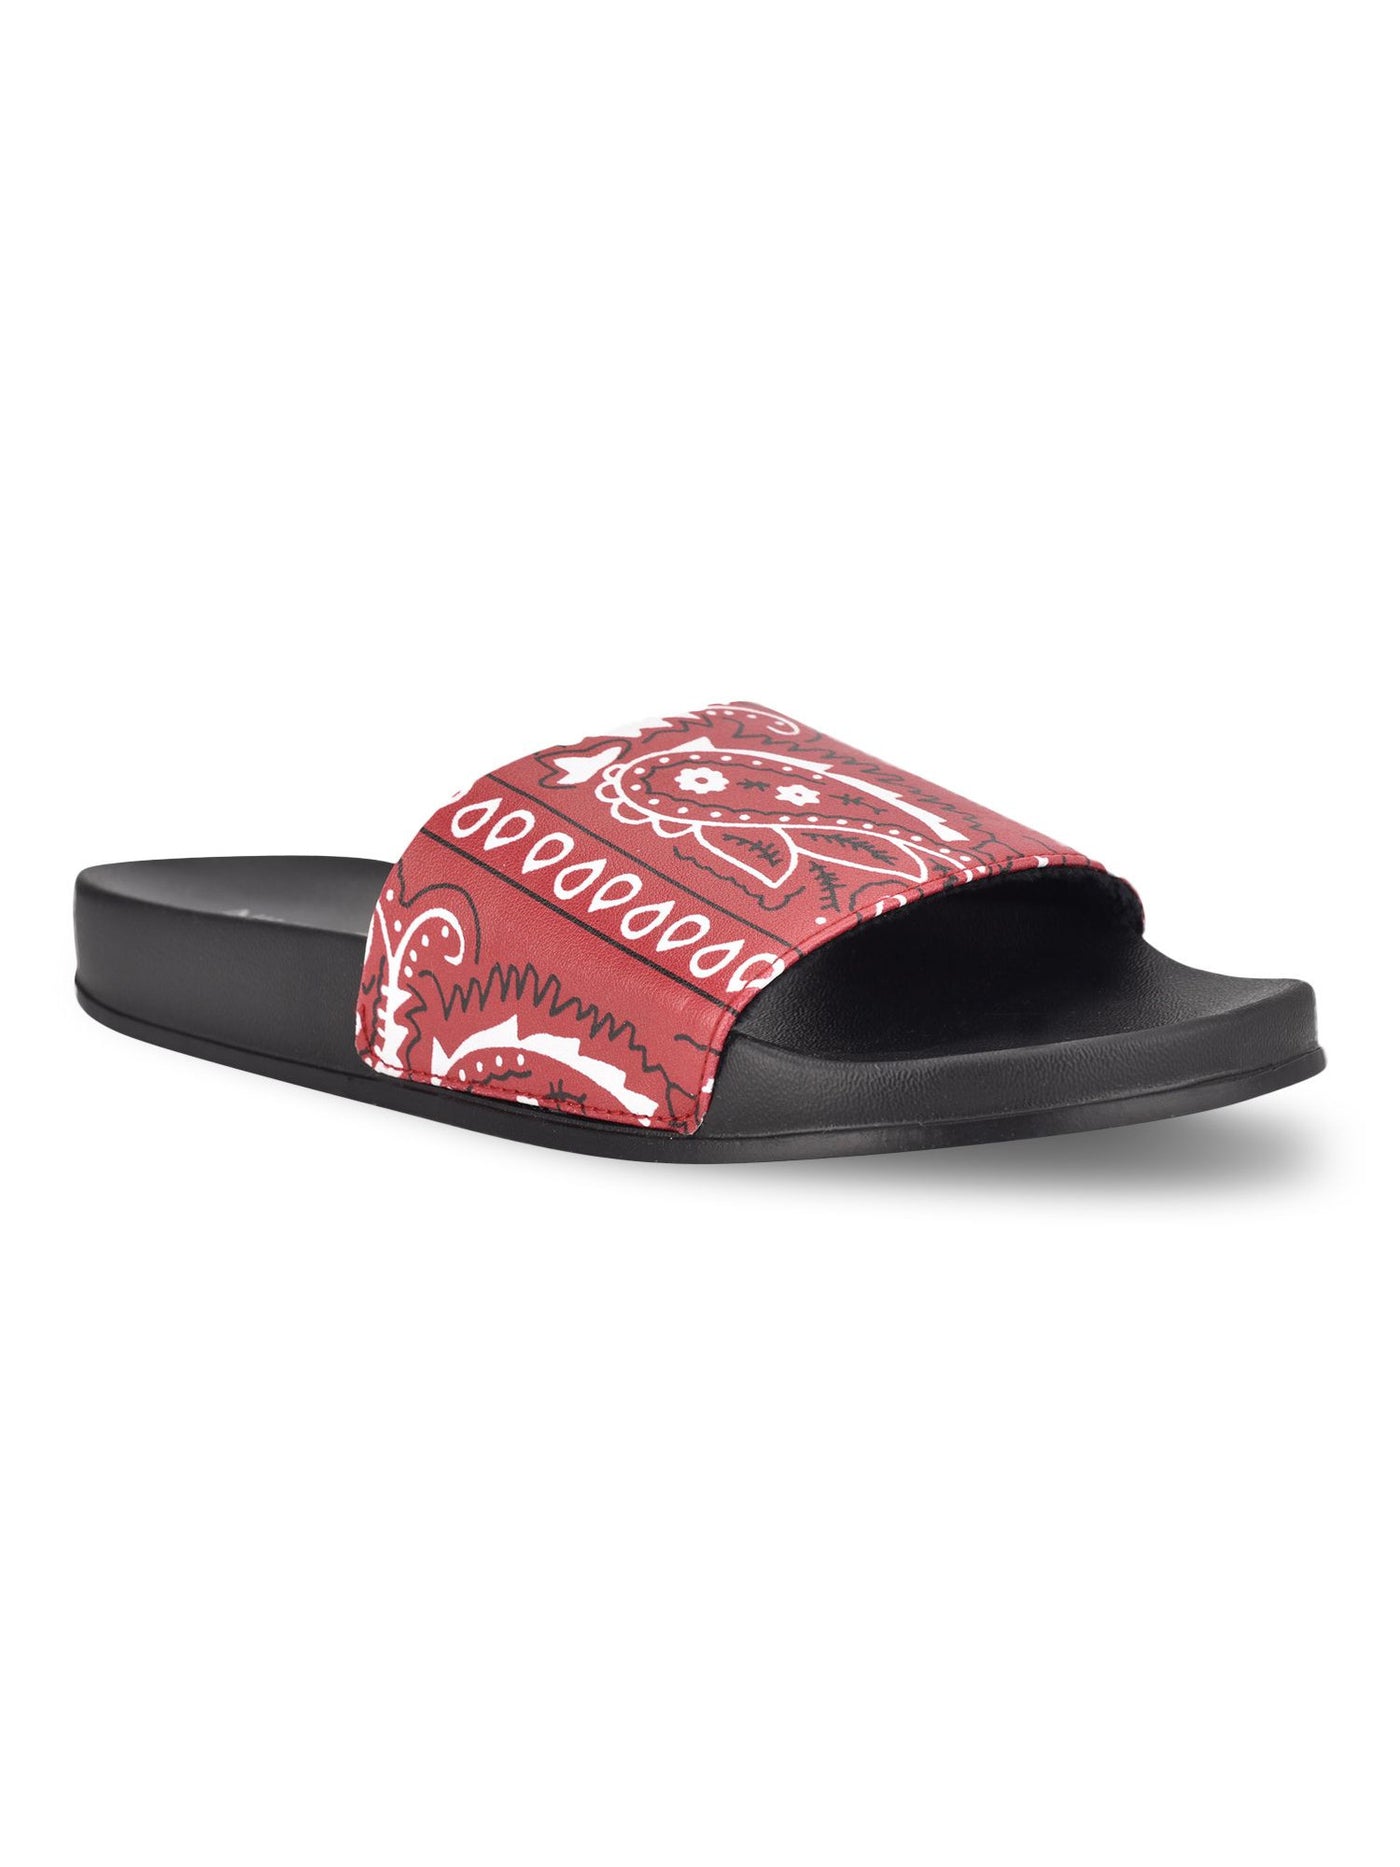 NINE WEST Womens Red Gradient Iridescent Comfort Sandbar Round Toe Wedge Slip On Slide Sandals 8 M